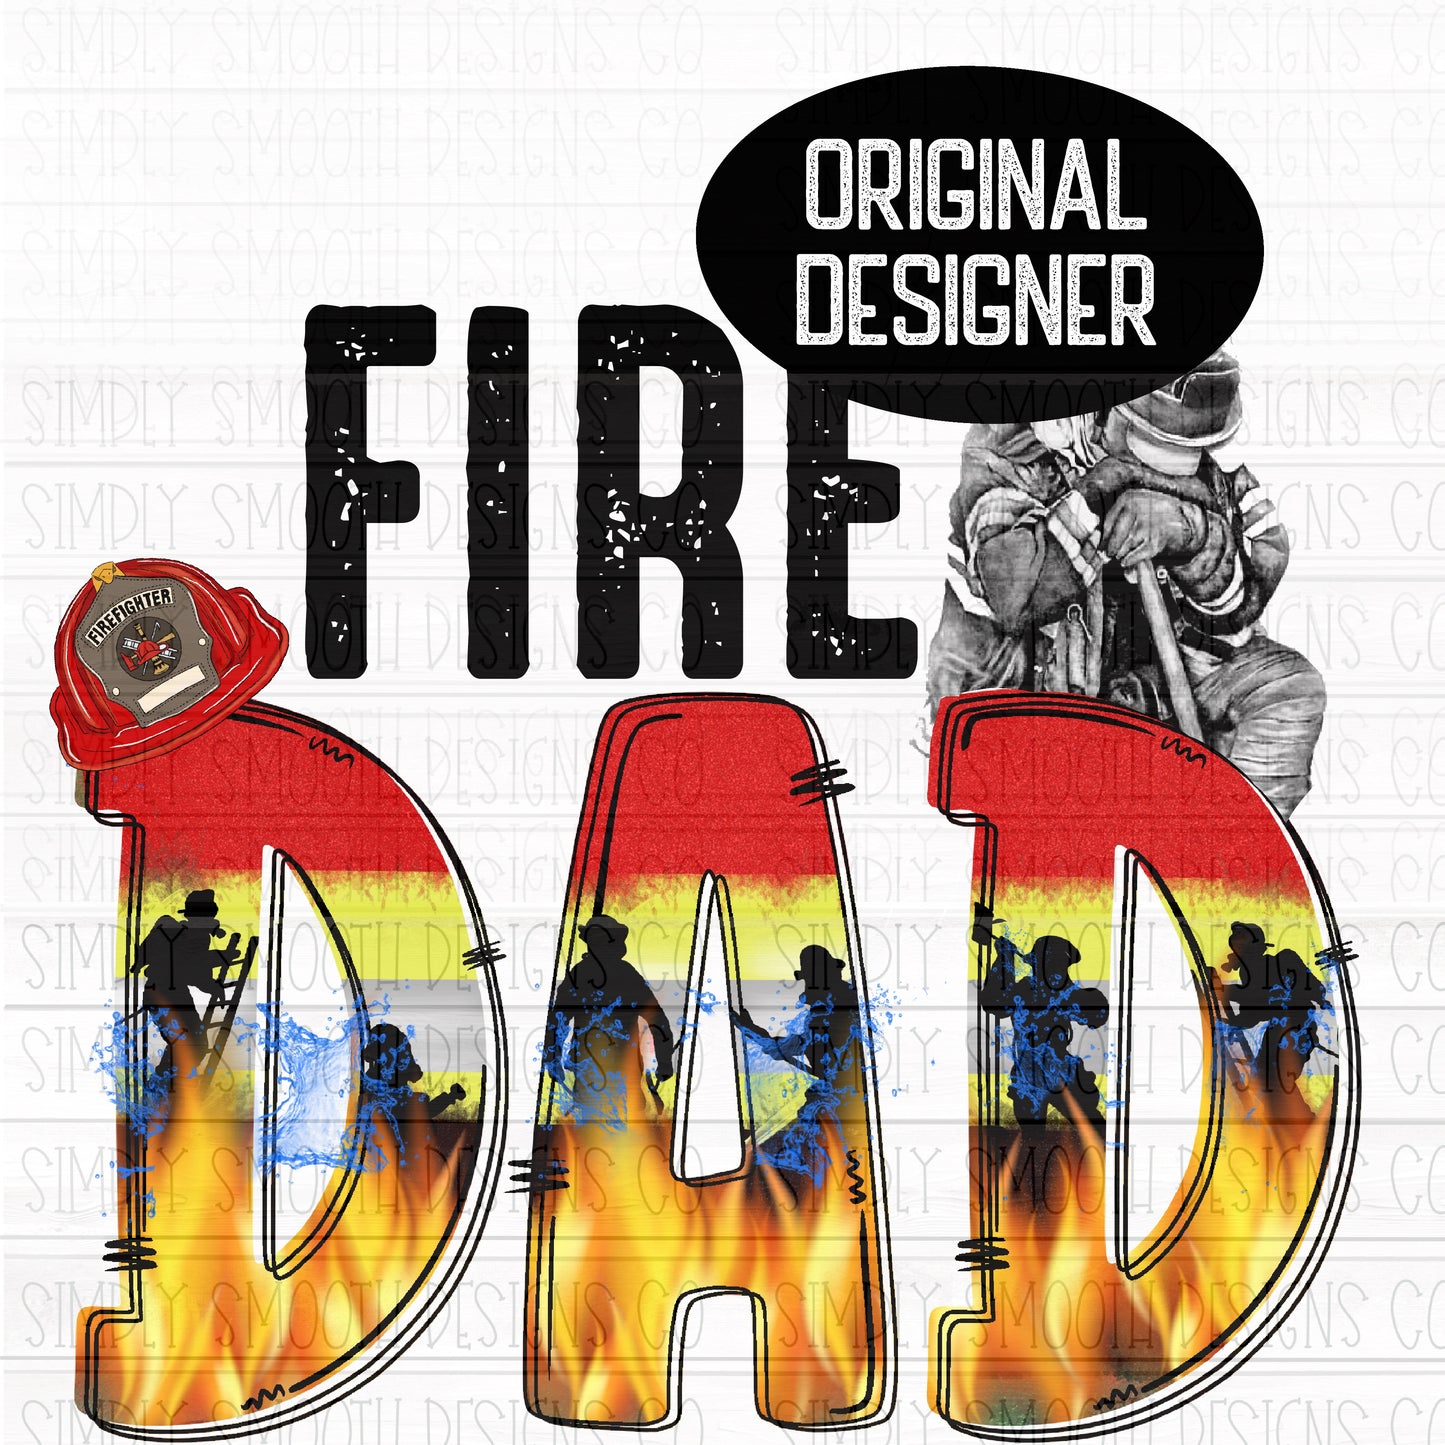 Fire Dad